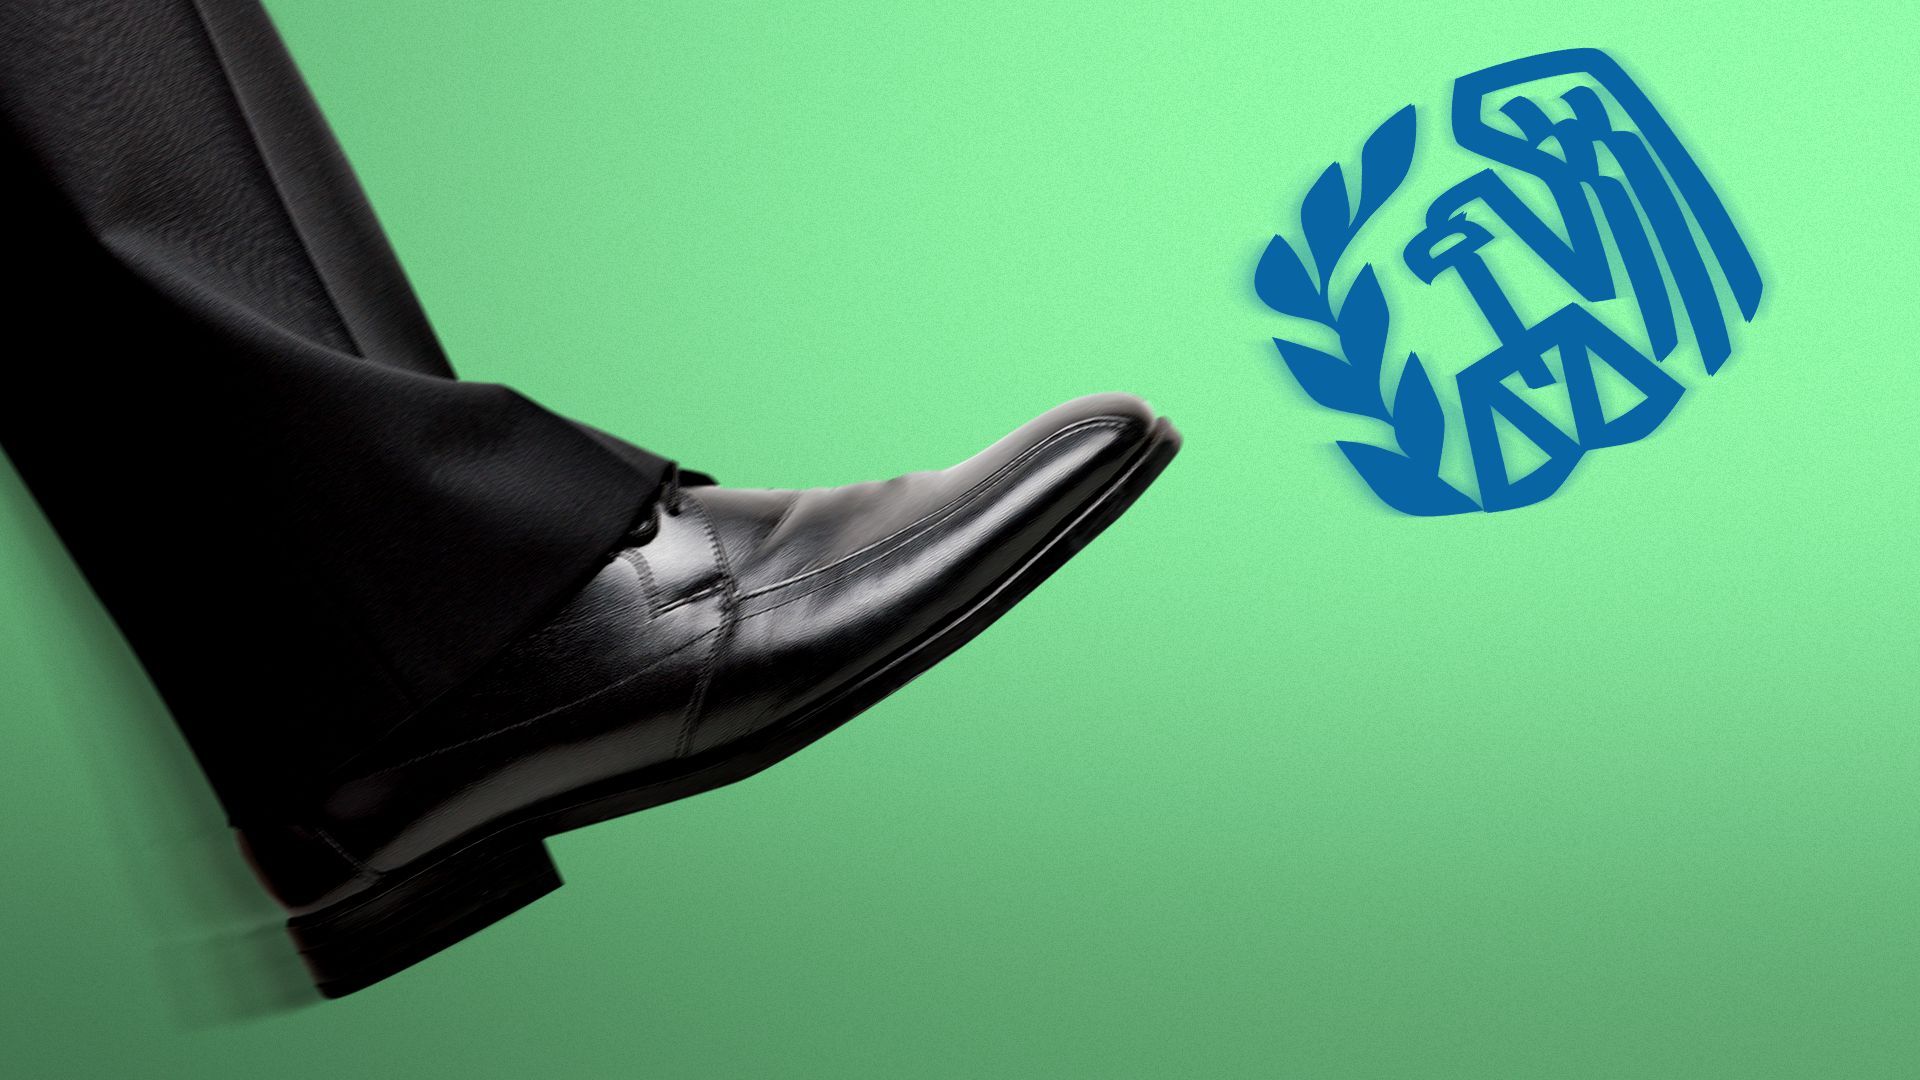 Illustration of a shoe kicking the IRS logo.